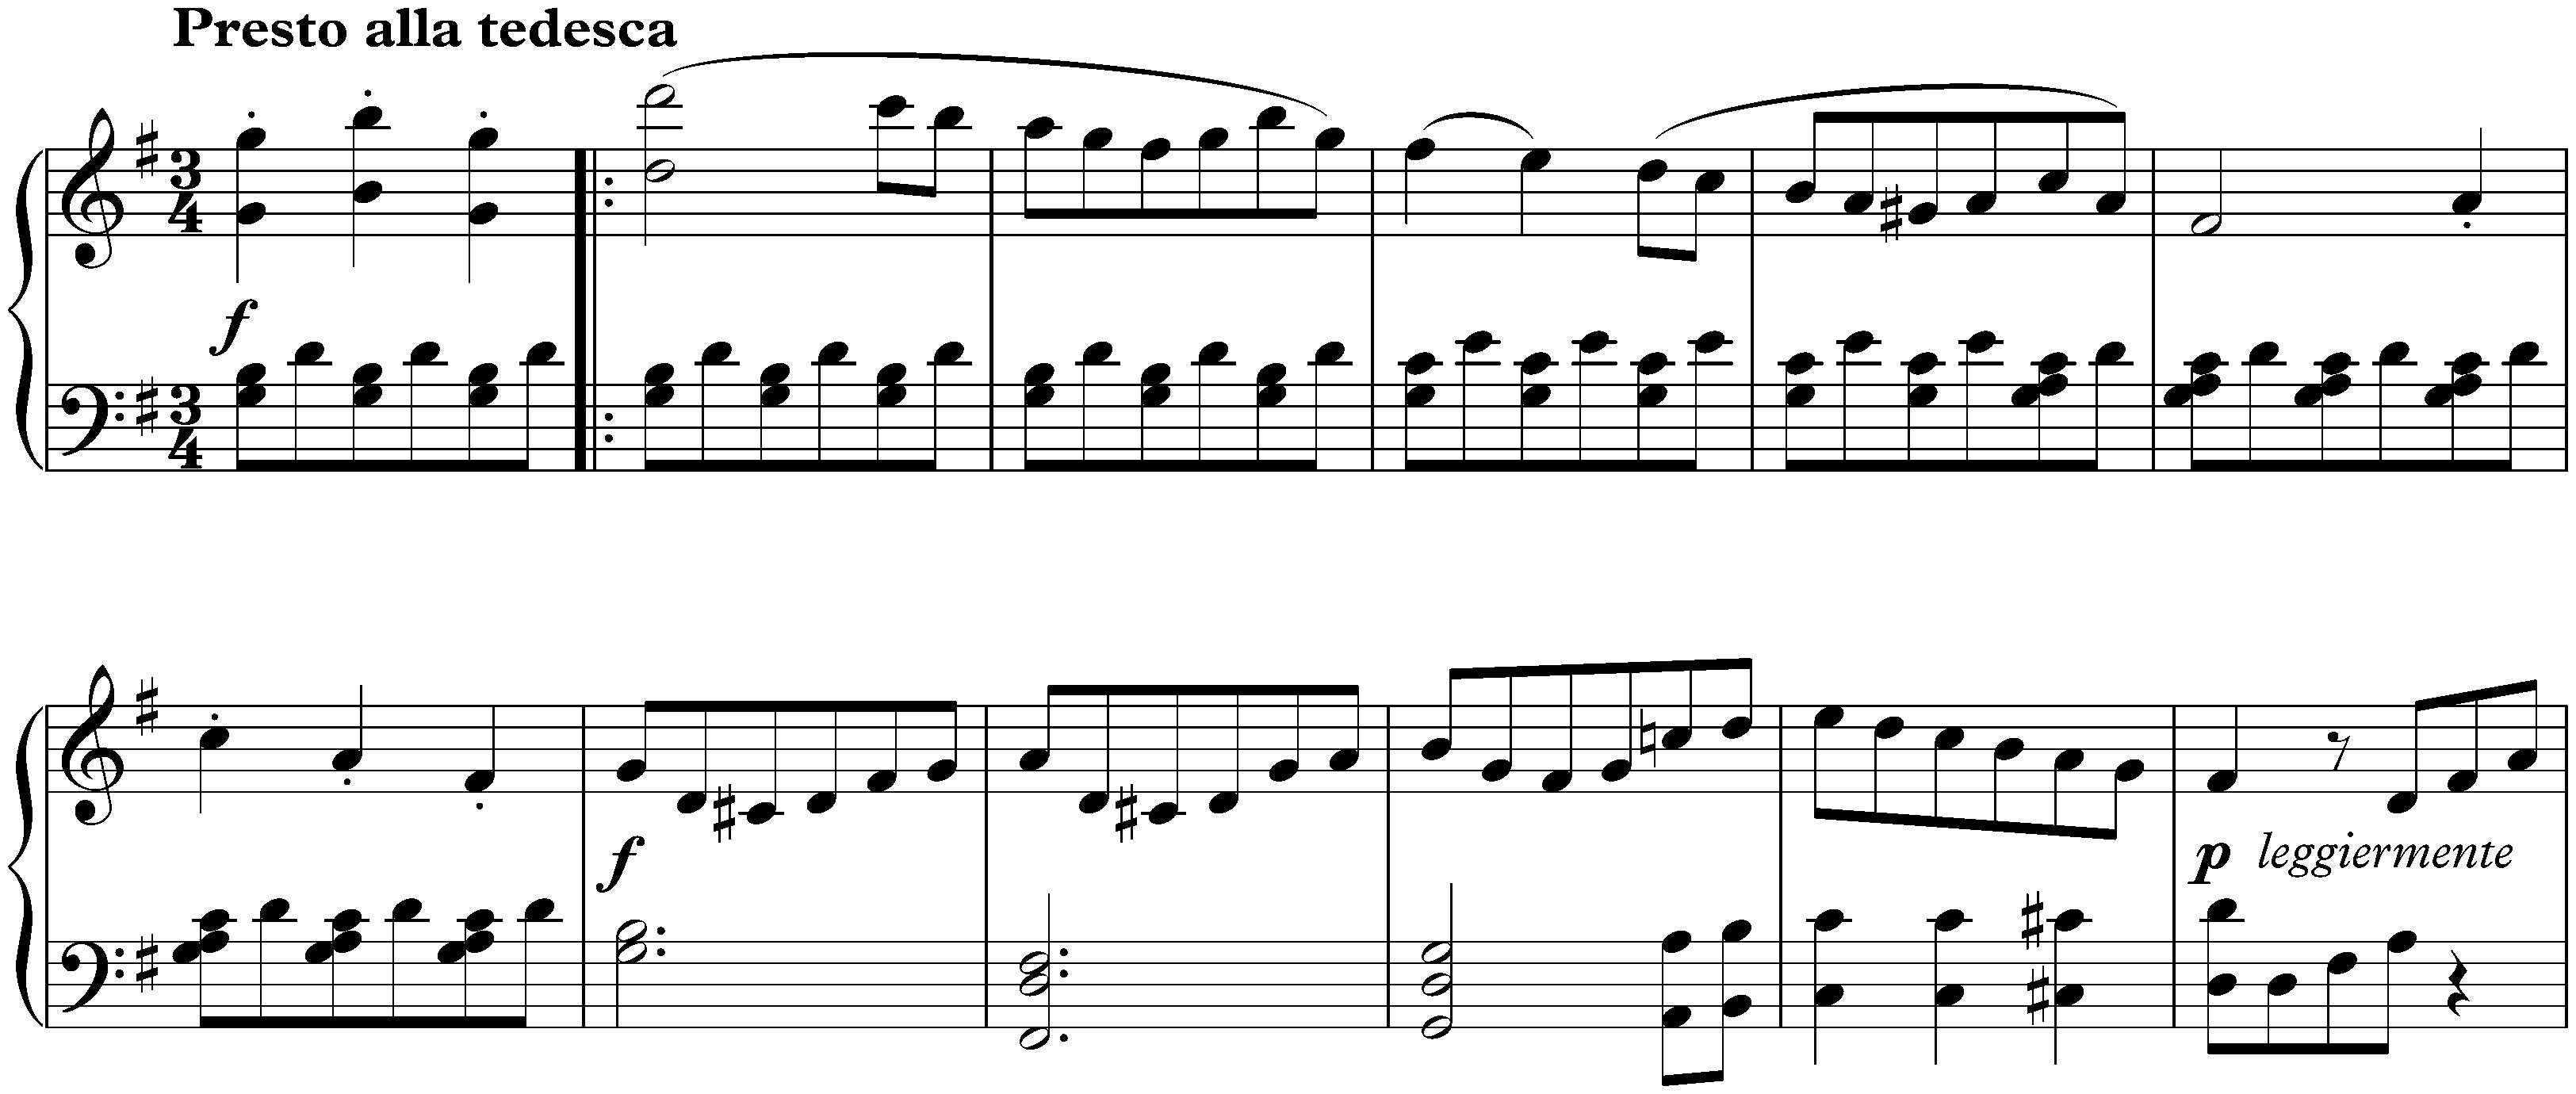 Sonata No 25 In G Major Op 79 Ludwig Van Beethoven